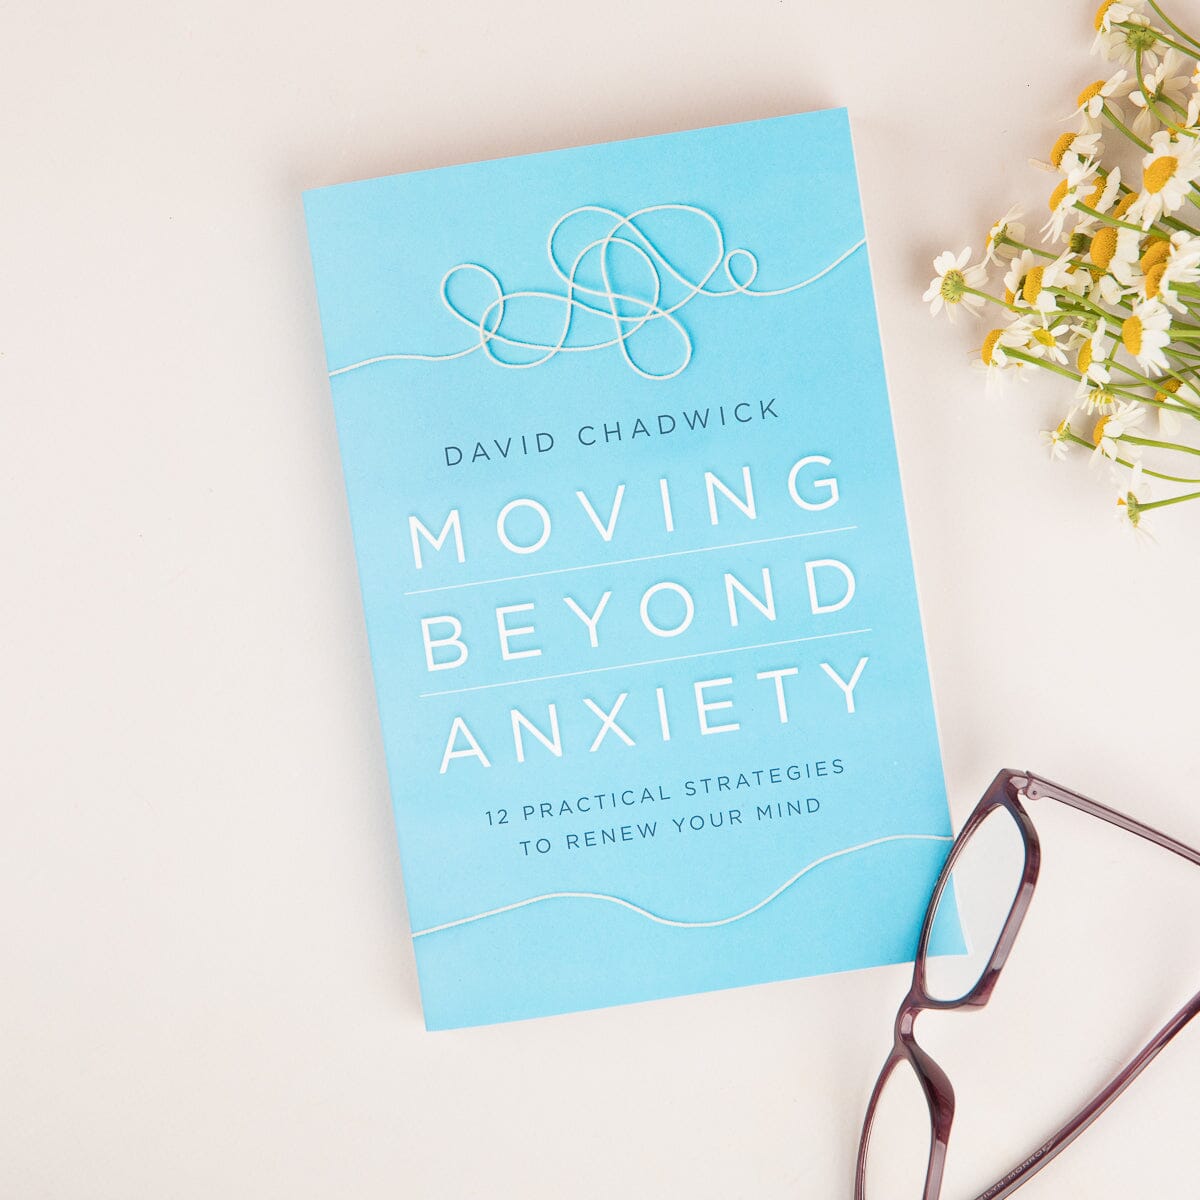 Moving Beyond Anxiety by David Chadwick